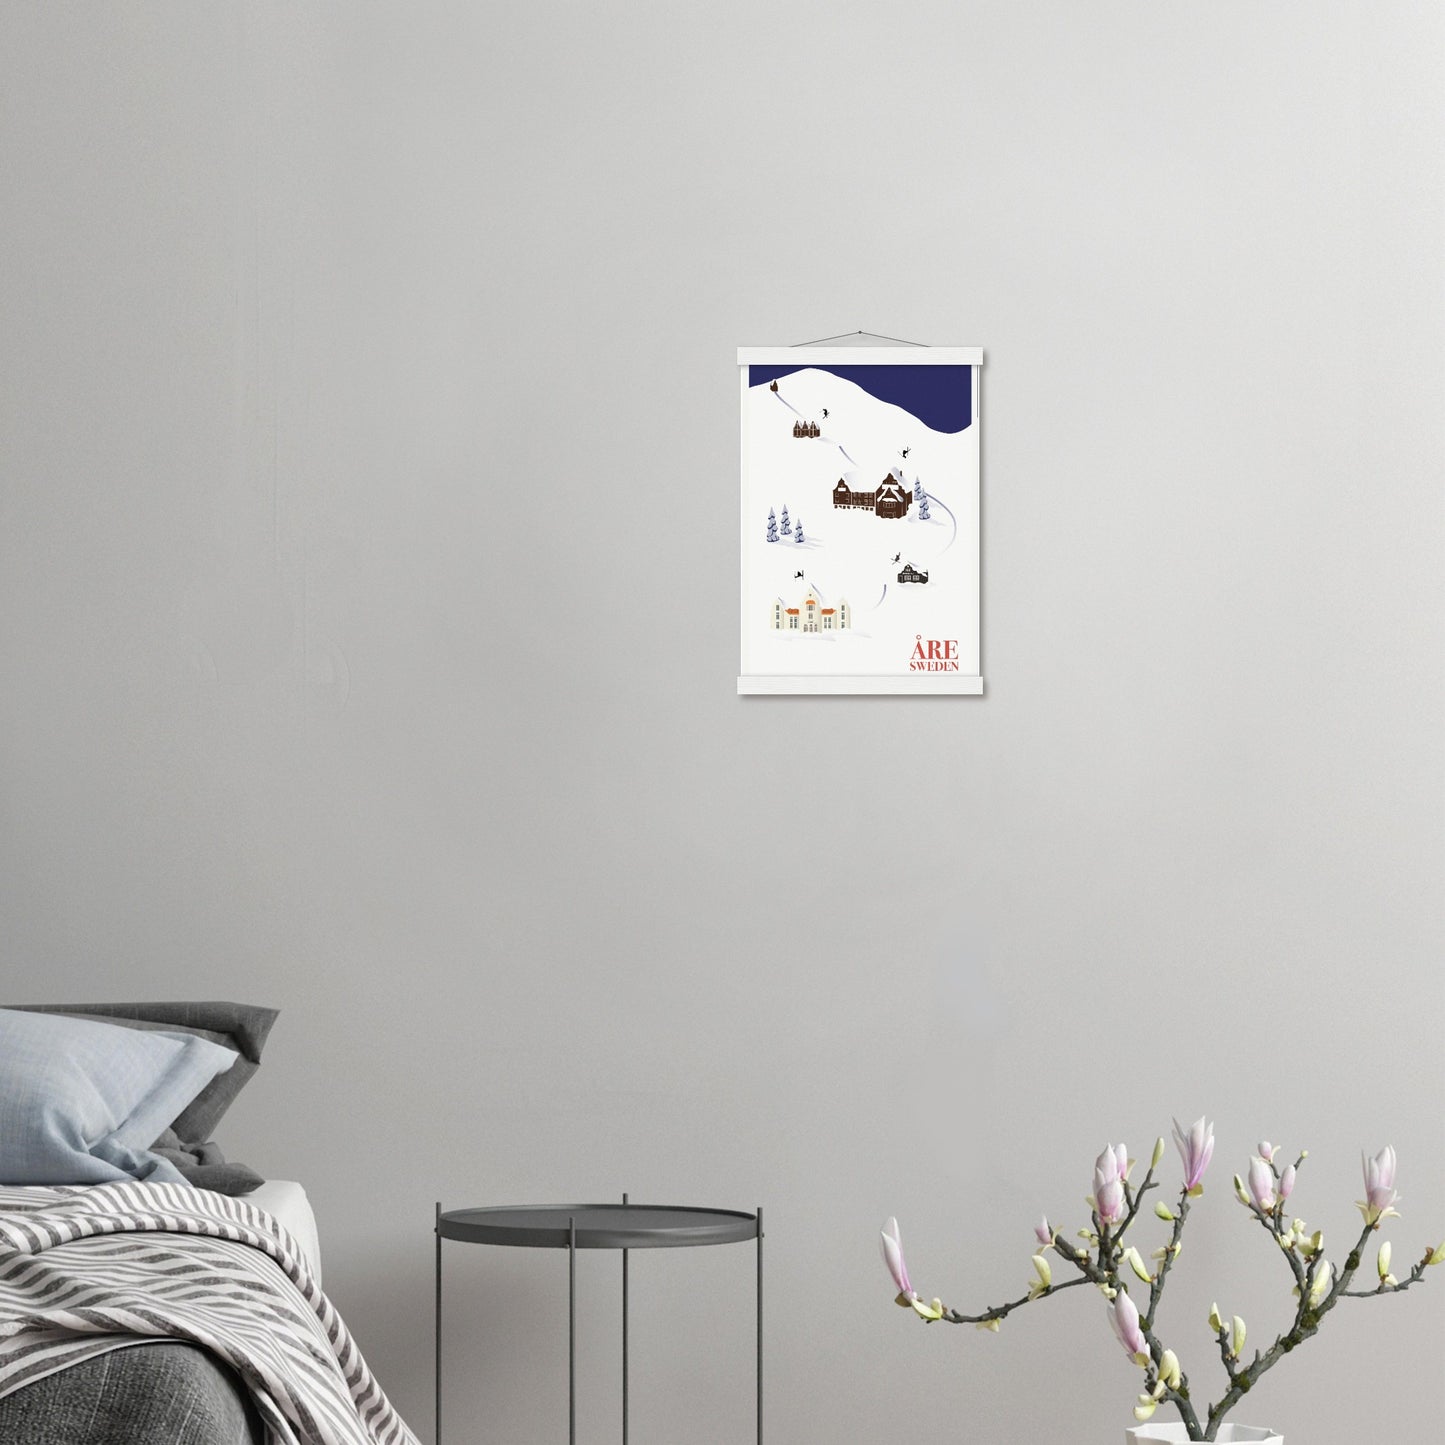 Åre, Sweden, Jump, by Posterify design, Premium Matte Paper Poster - Posterify